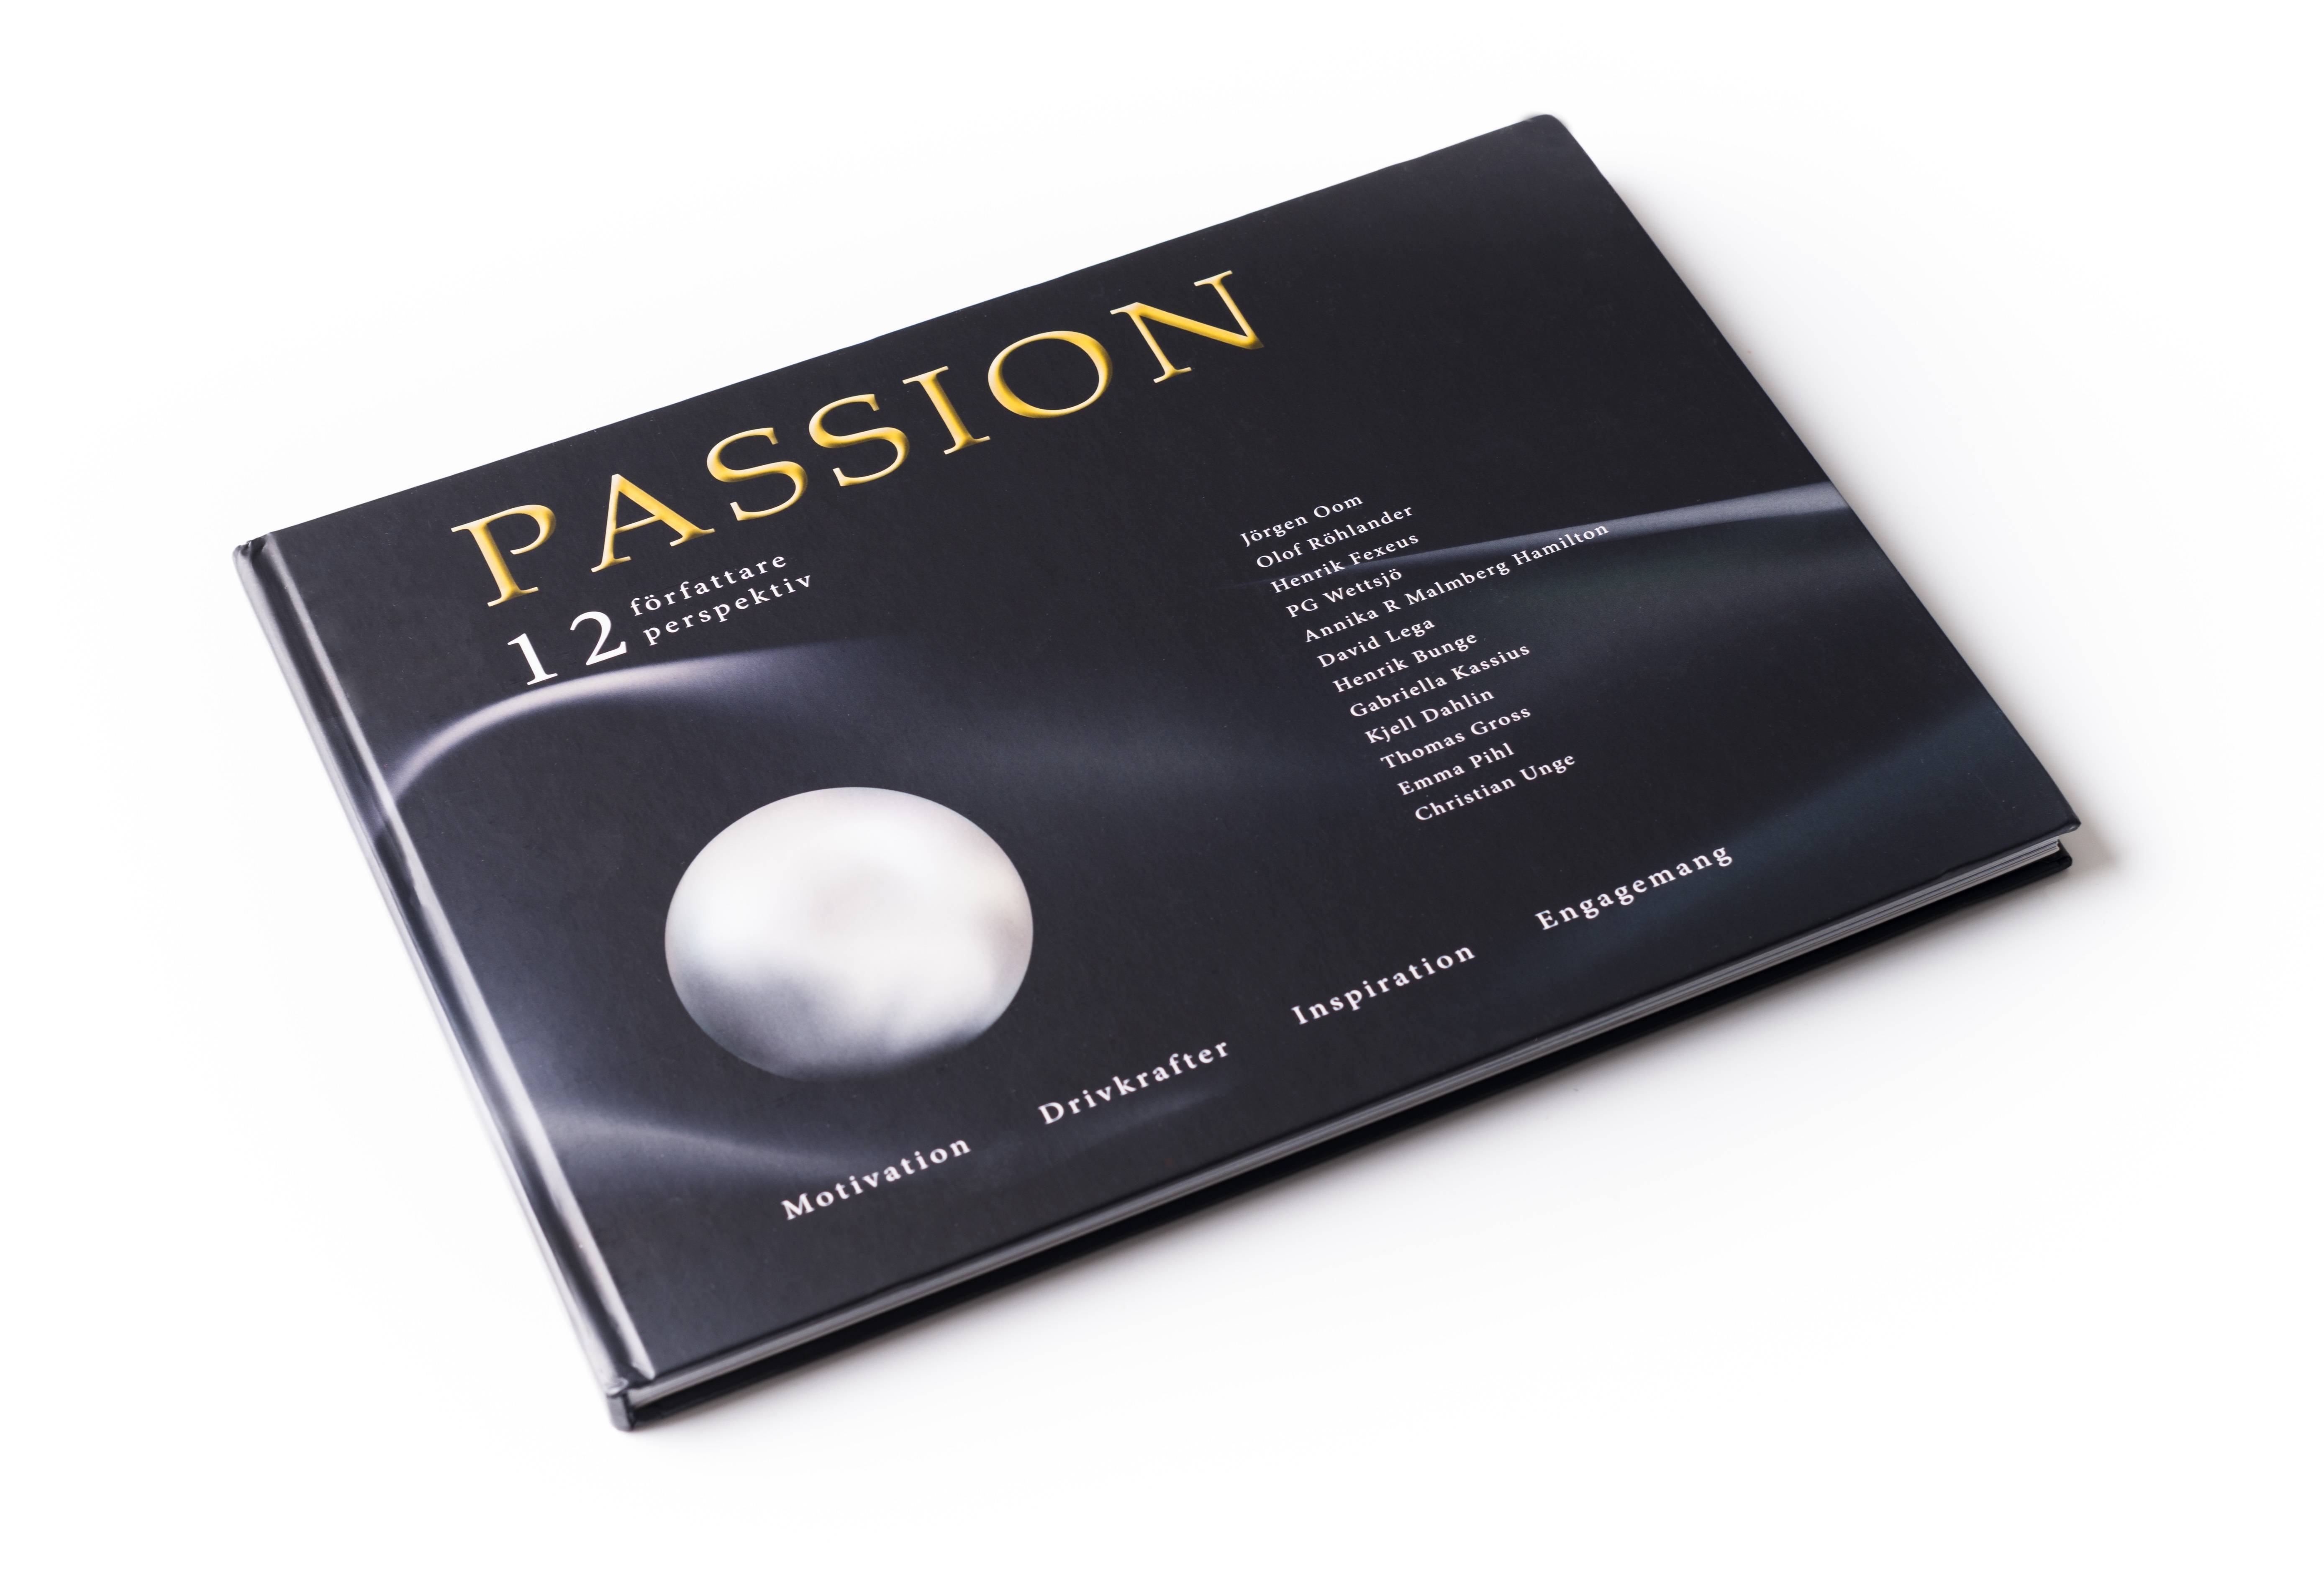 Passion : motivation, drivkrafter, inspiration, engagemang